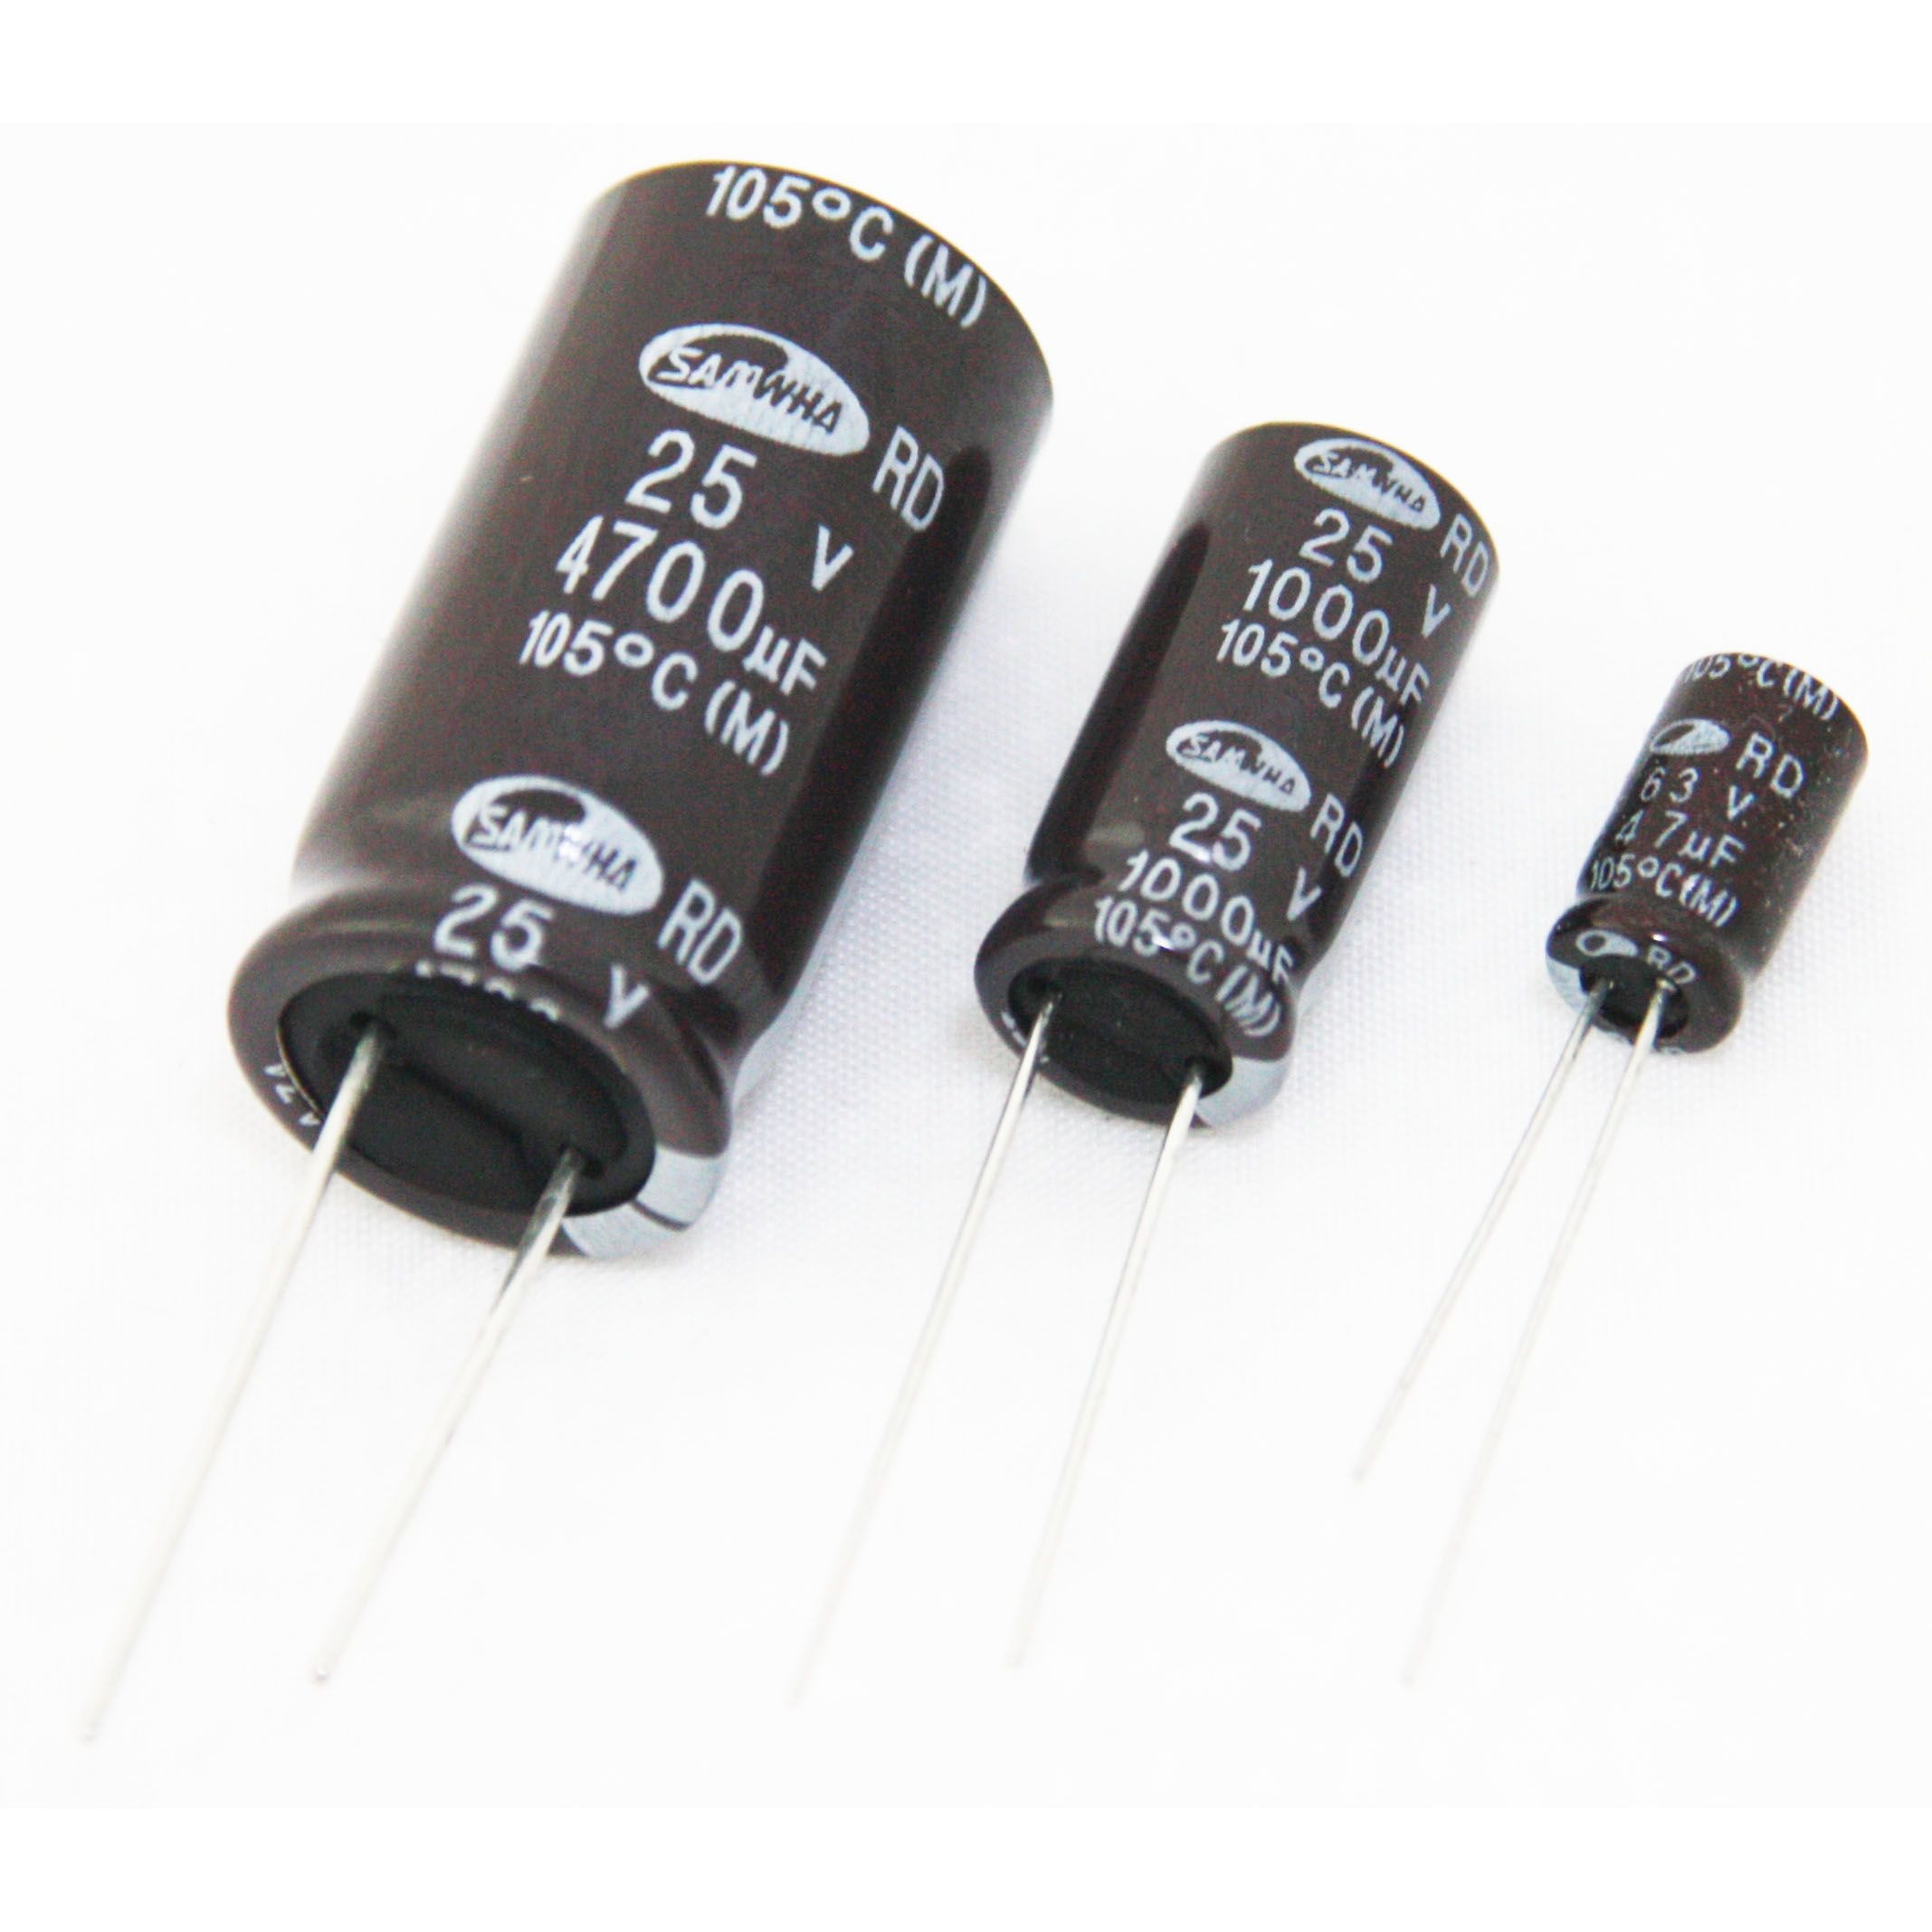 Electrolytic capacitor 105° 680uF-35V